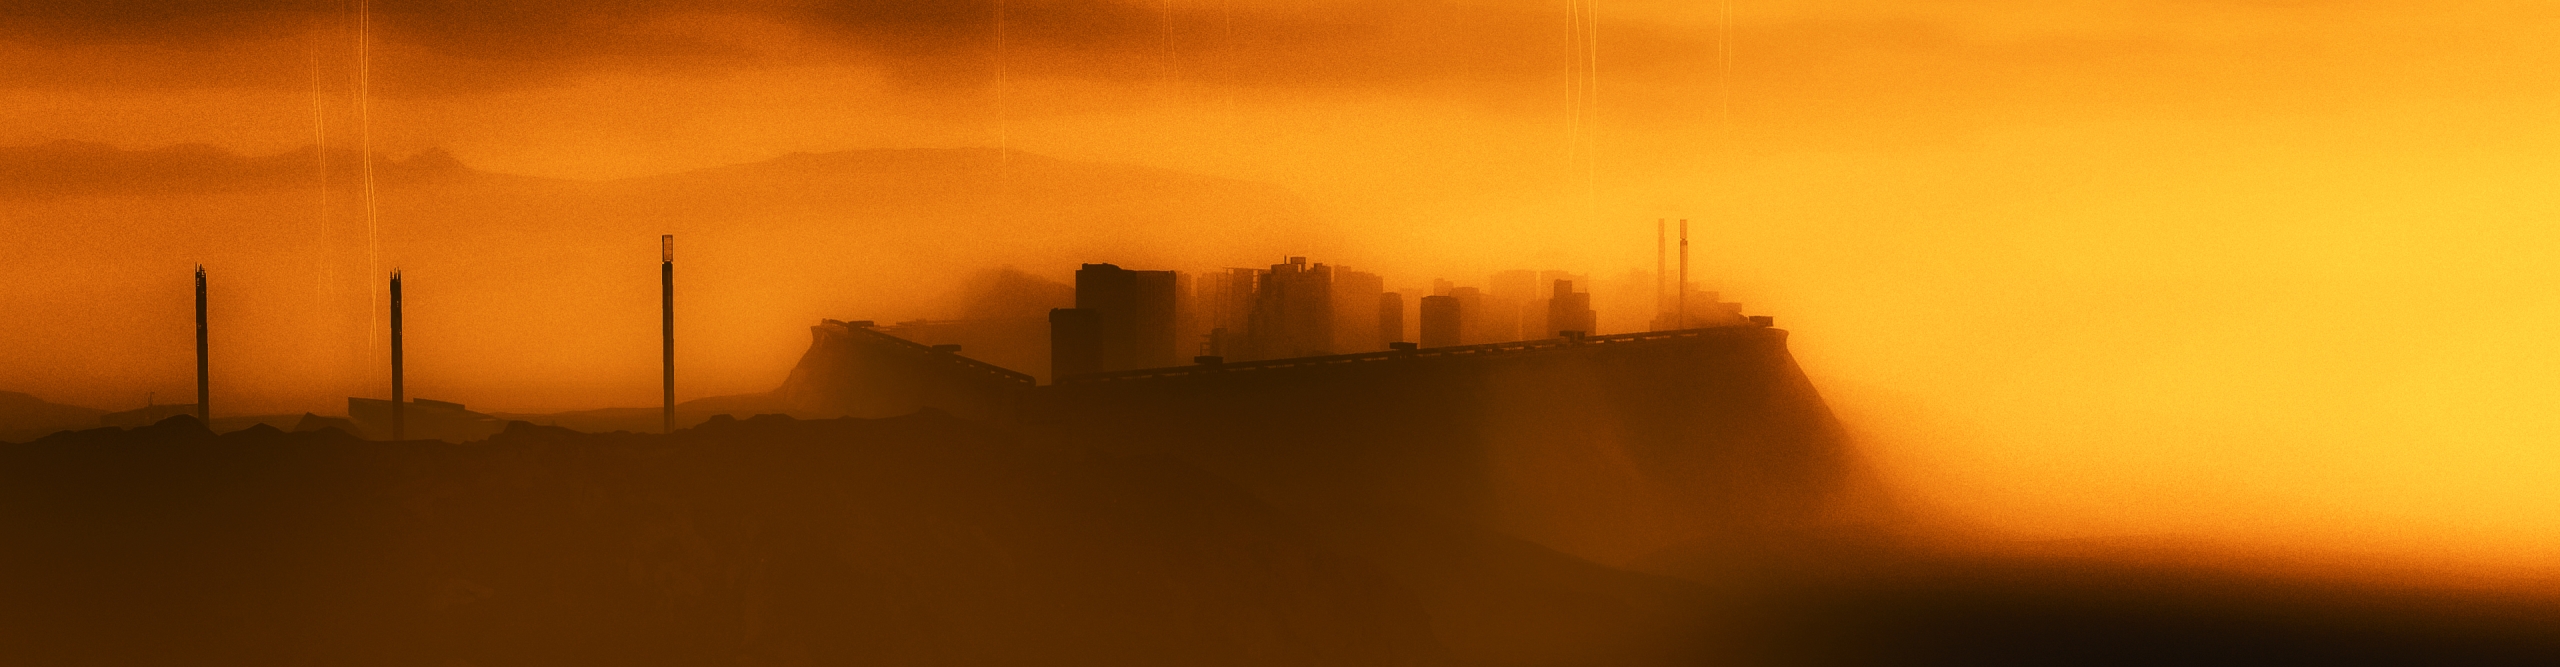 City in a hazy light